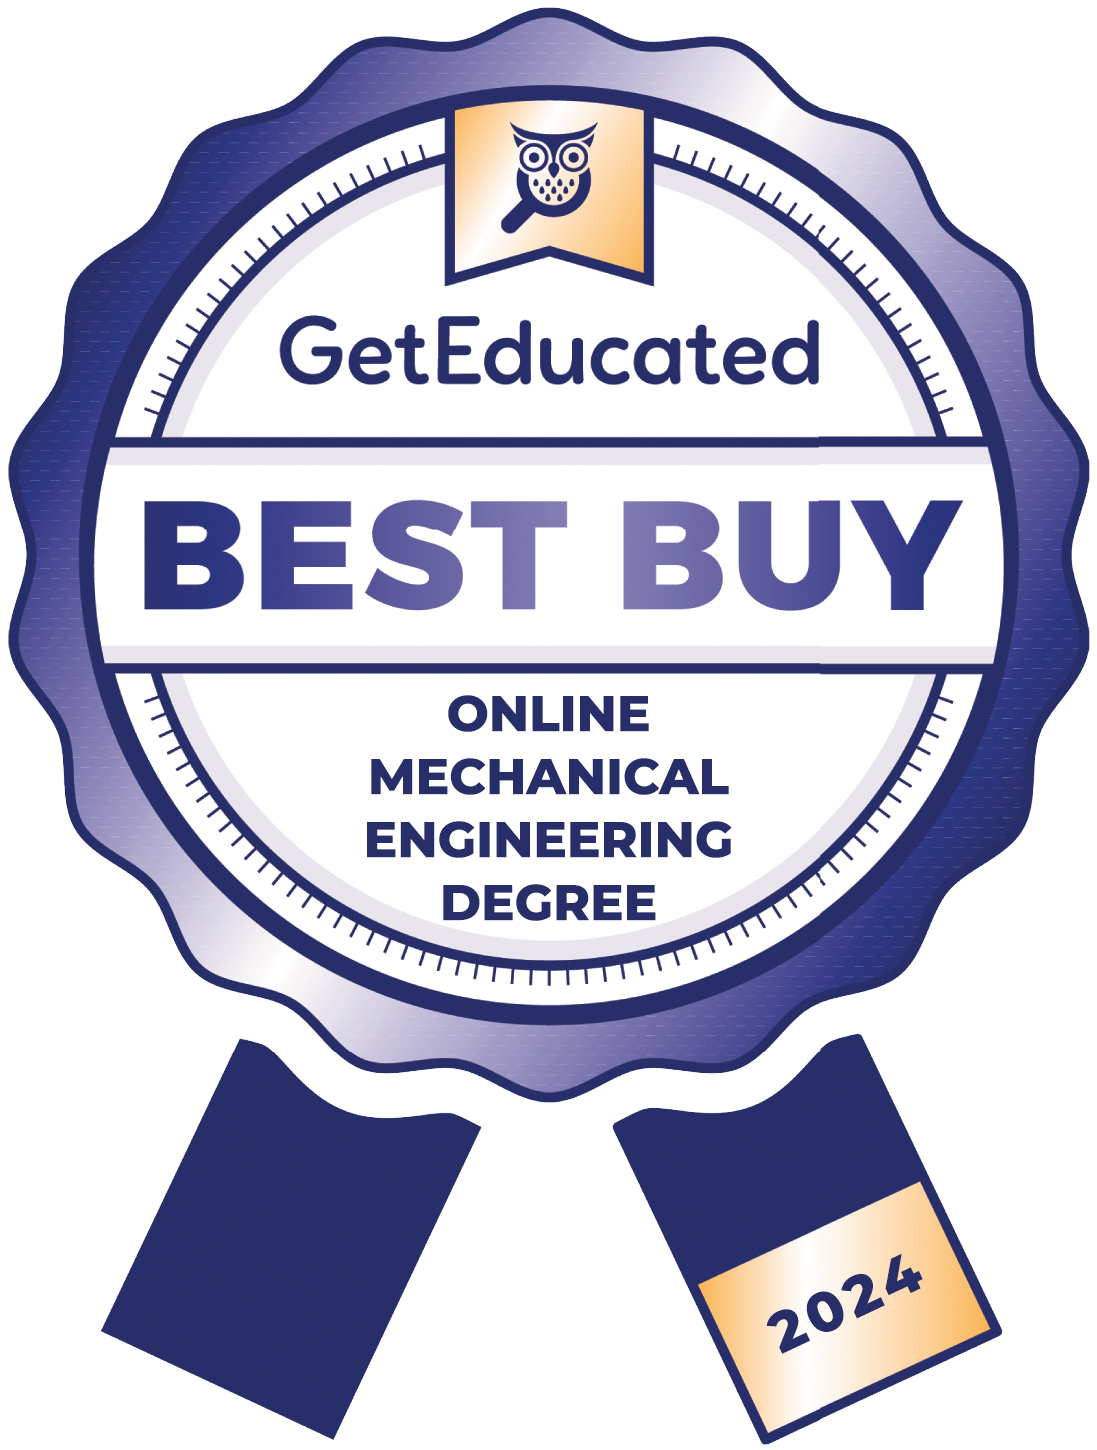 Rankings for the cheapest online mechanical engineering degree programs